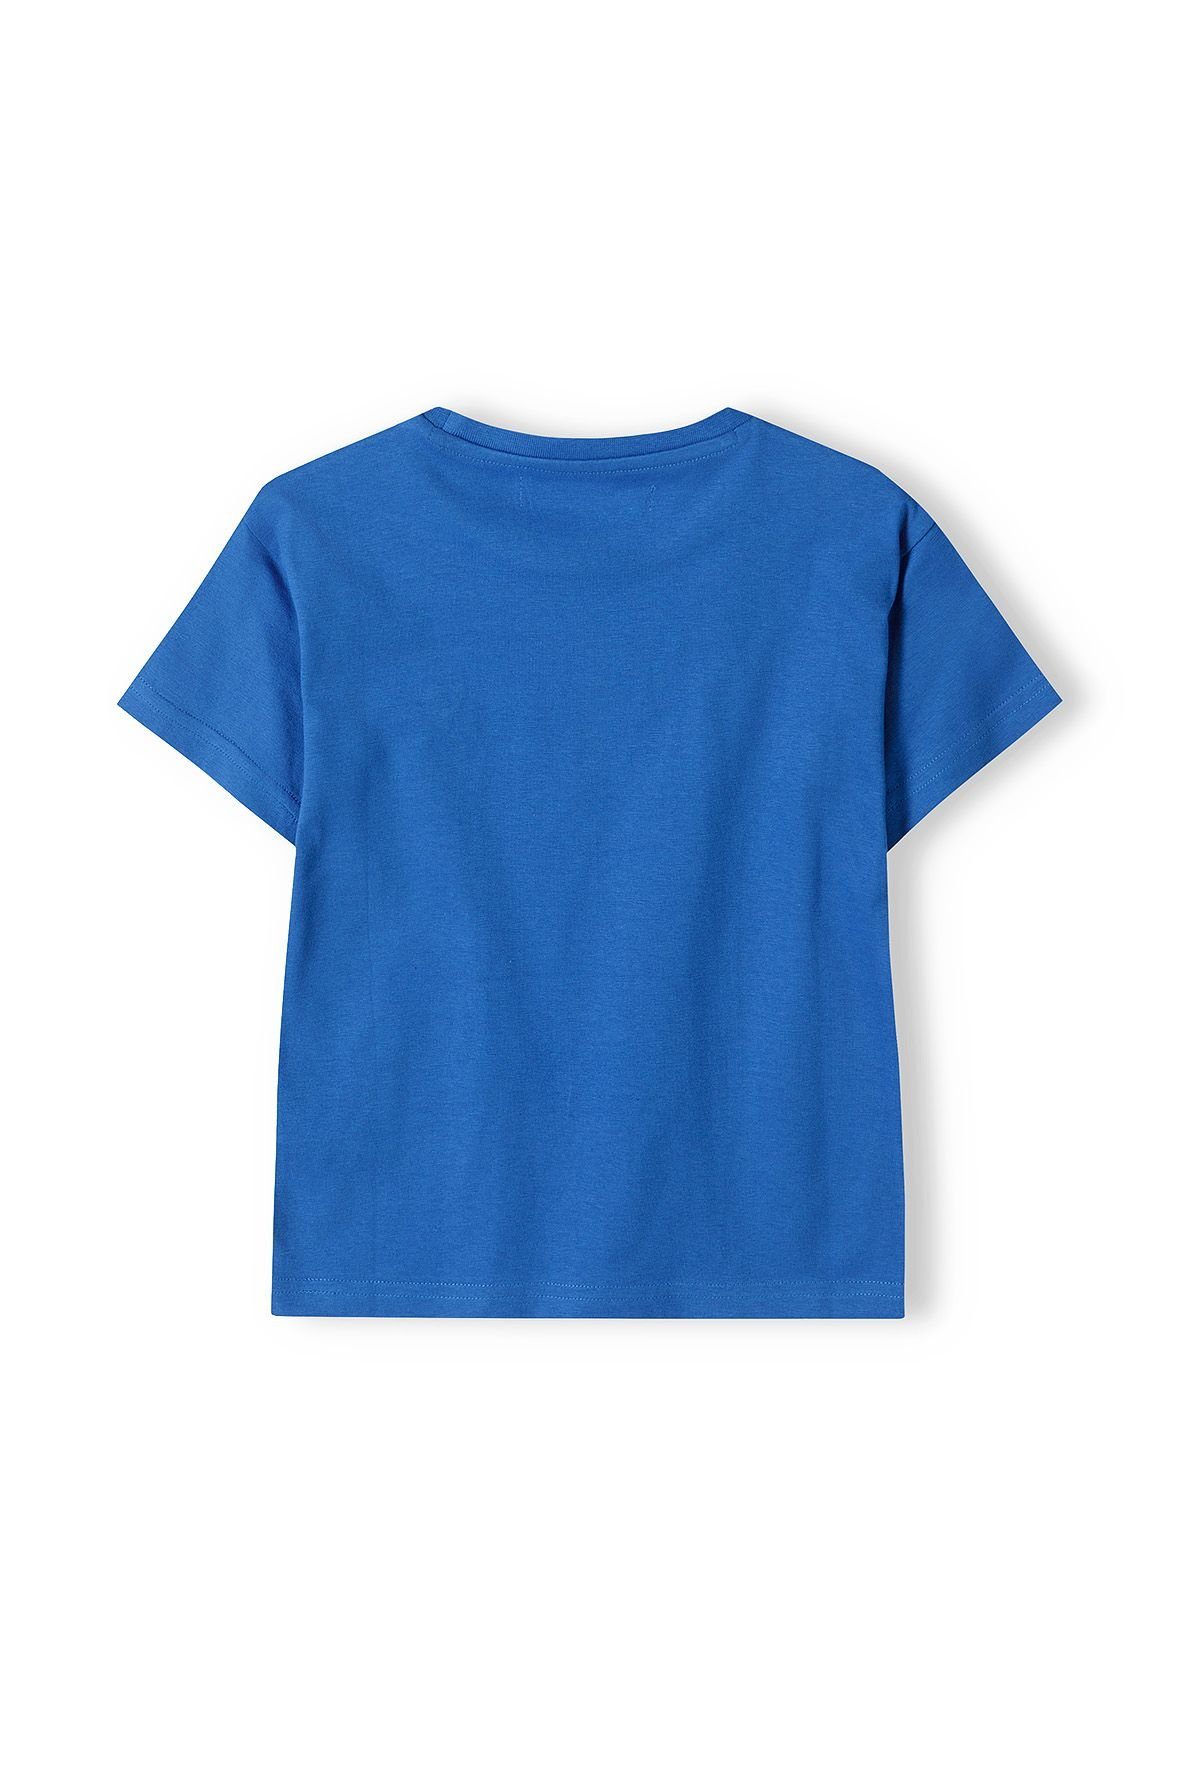 (12m-14y) MINOTI T-Shirt T-Shirts 4-Pack